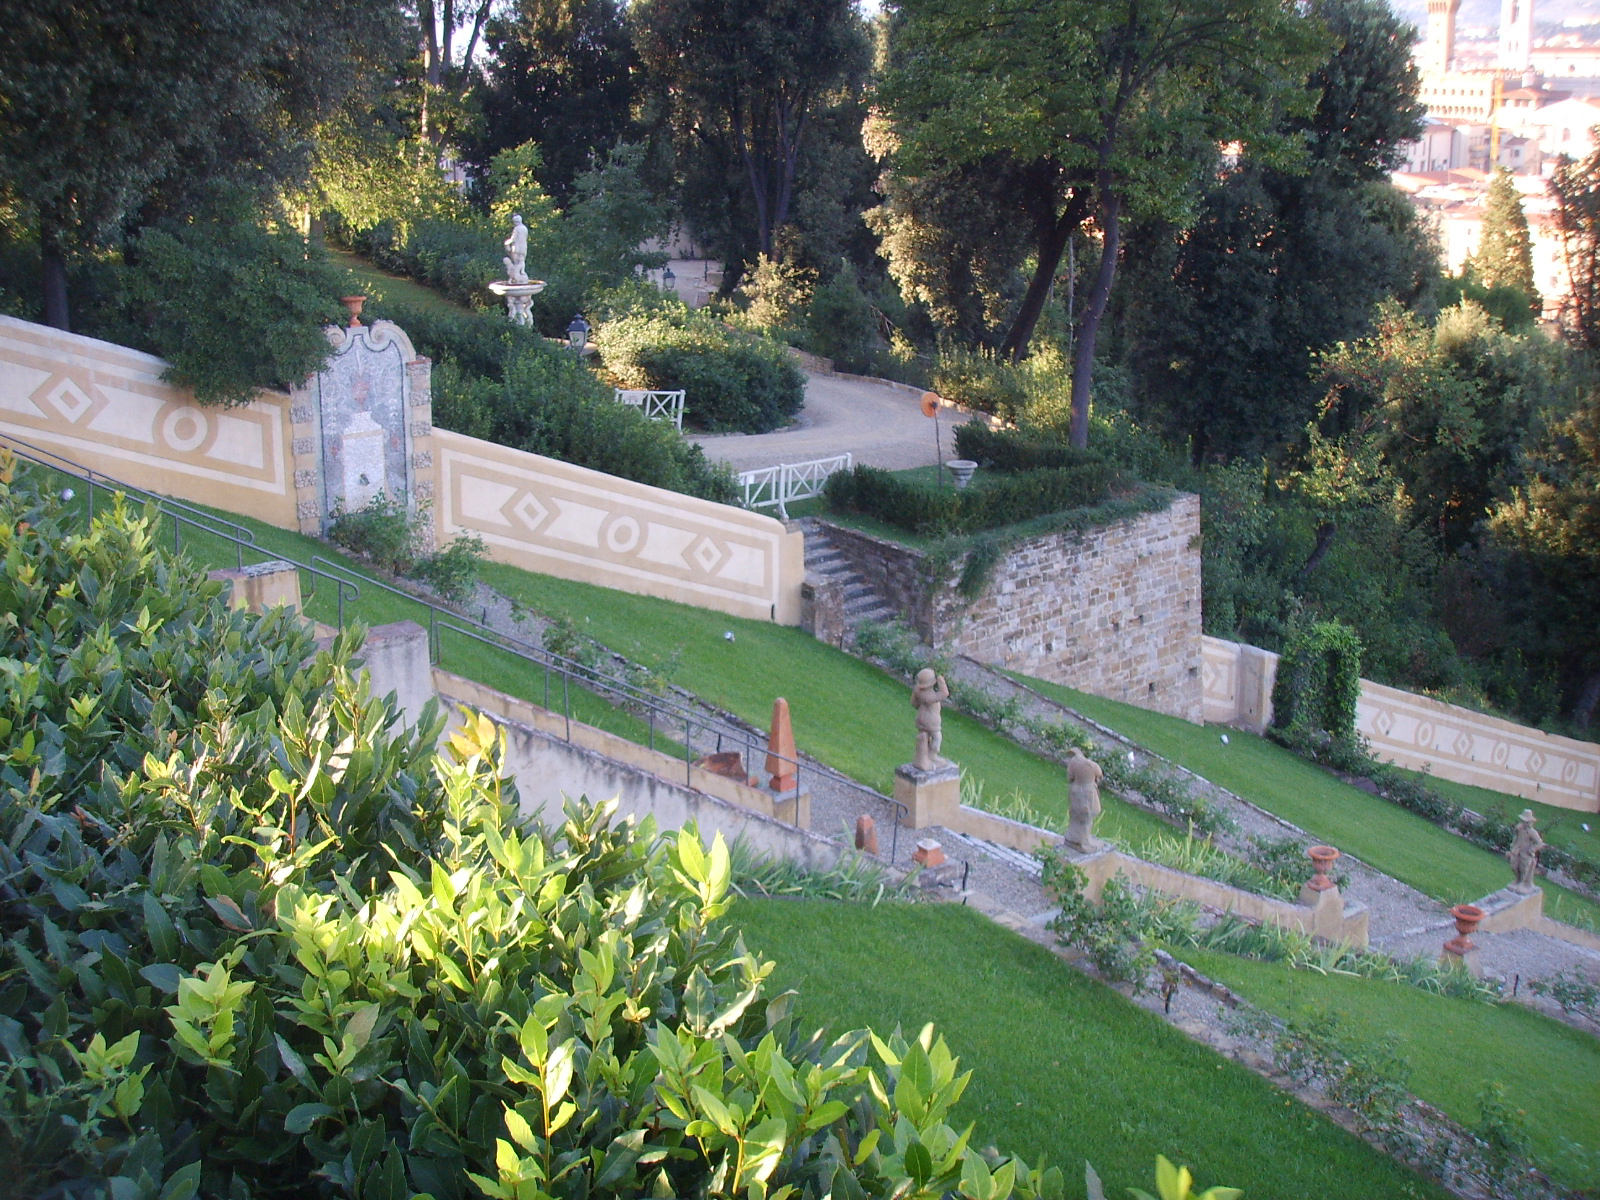 File:Giardino bardini, terrazzamento 01.JPG - Wikimedia Commons